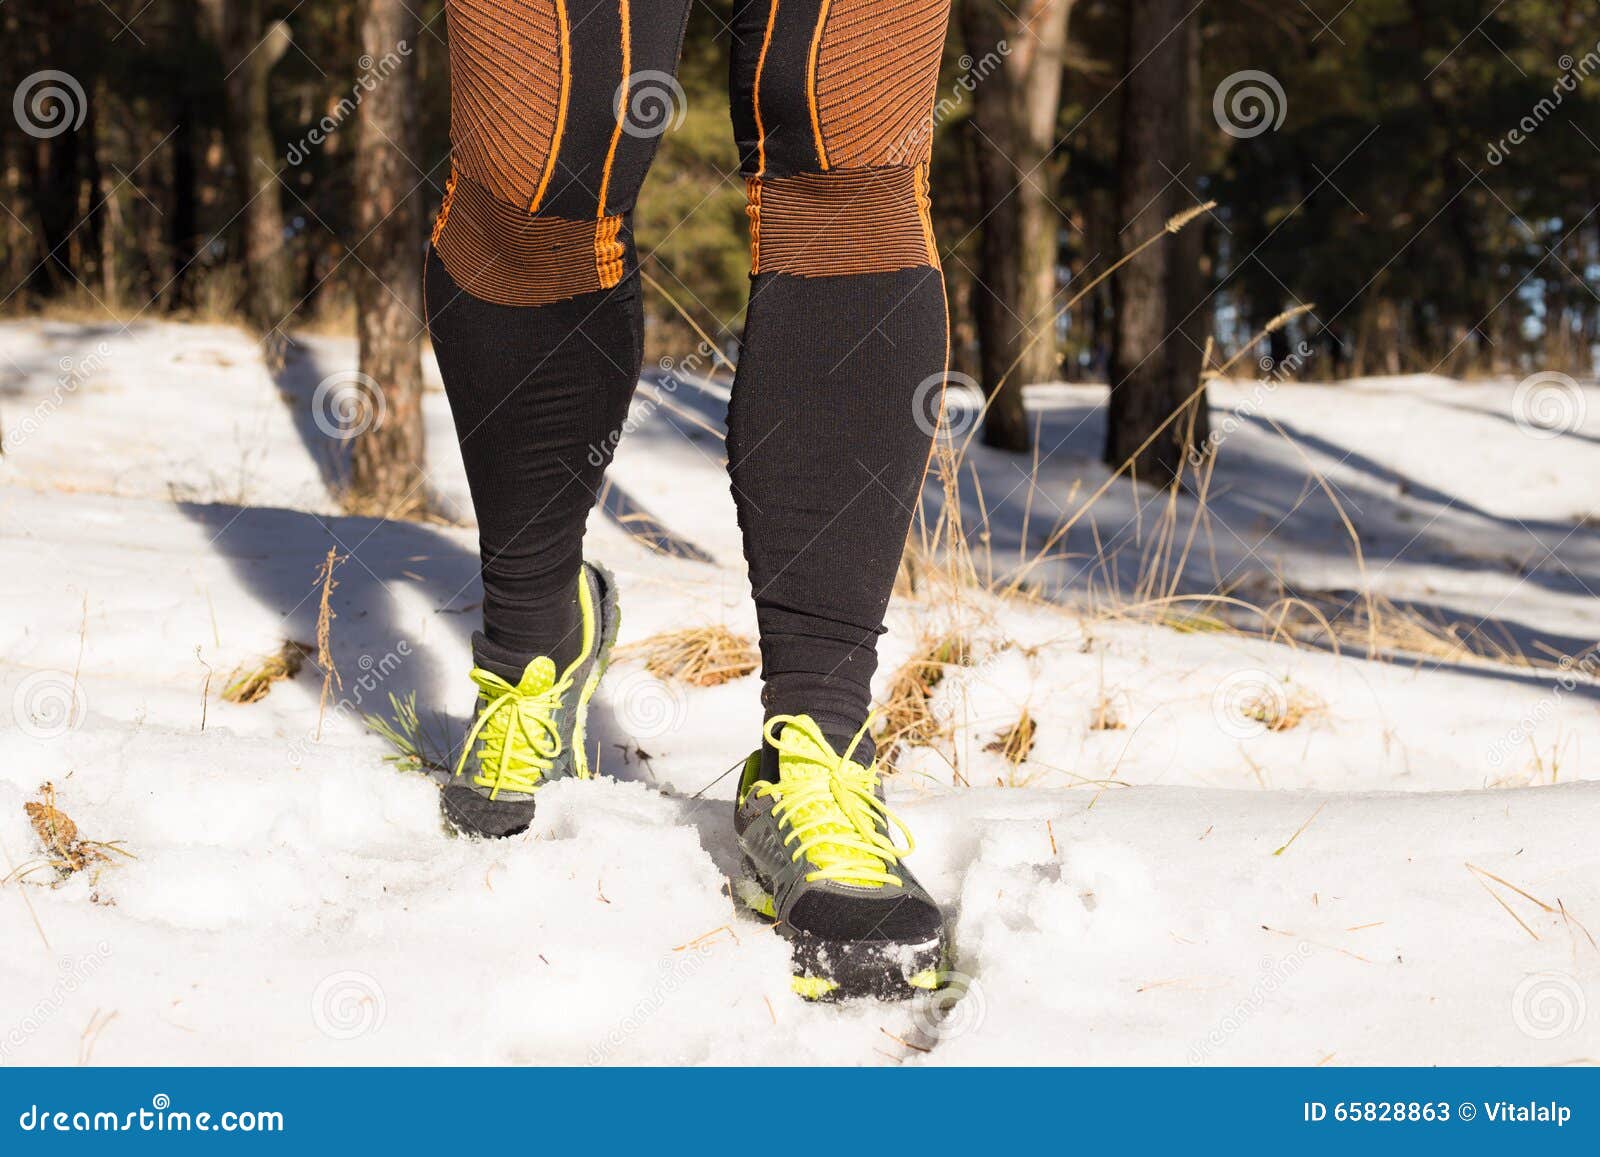 Winter Trail Running: Man Takes A Run On A Snowy Mountain ...